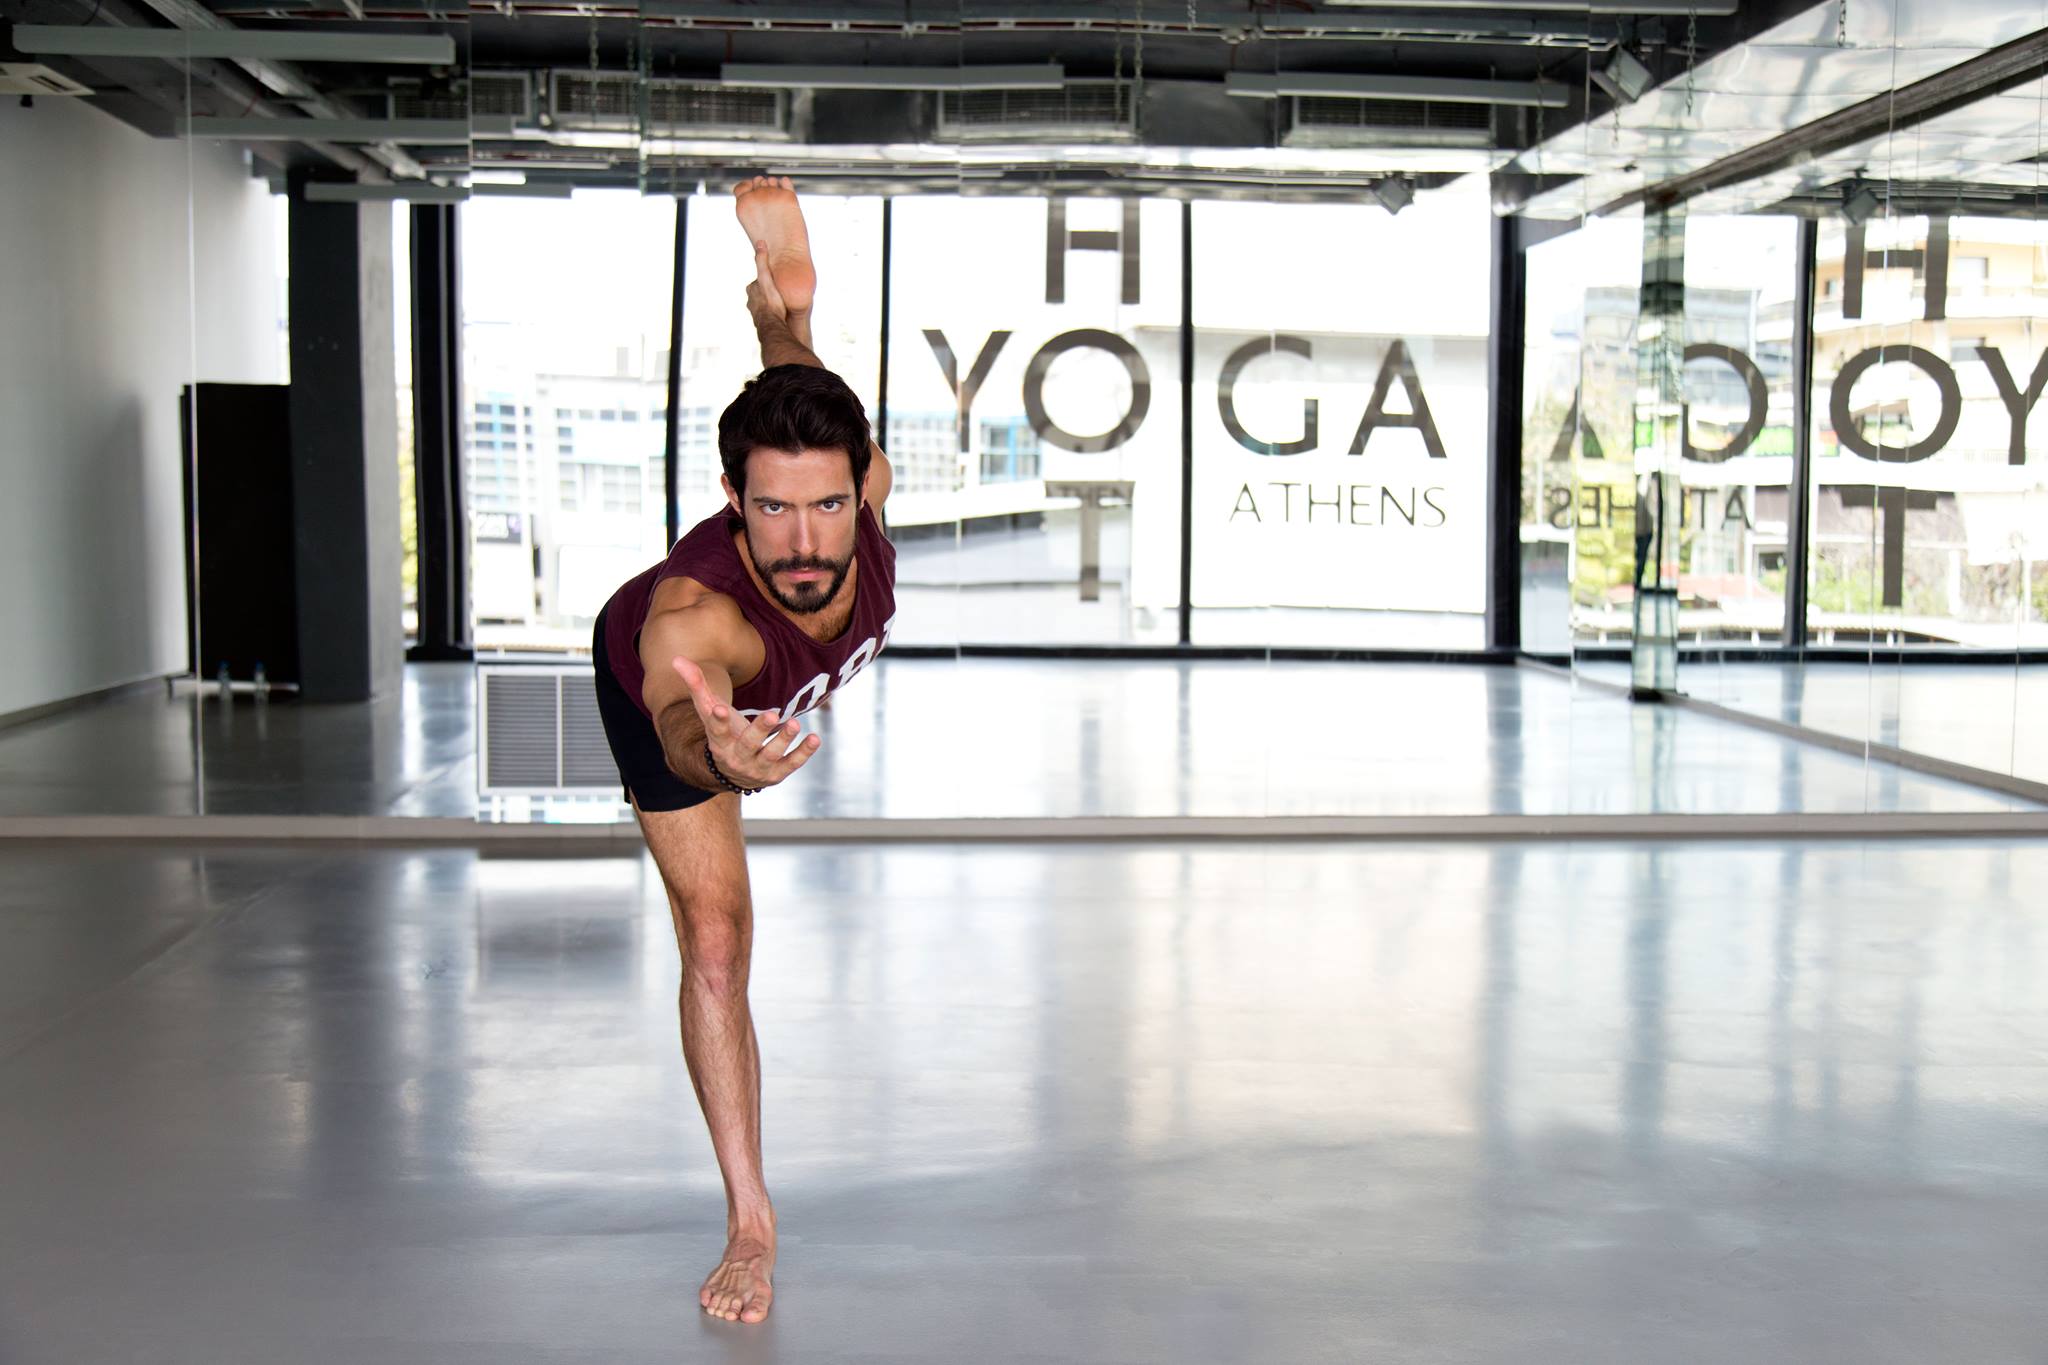 Hot Yoga Athens Studio Image